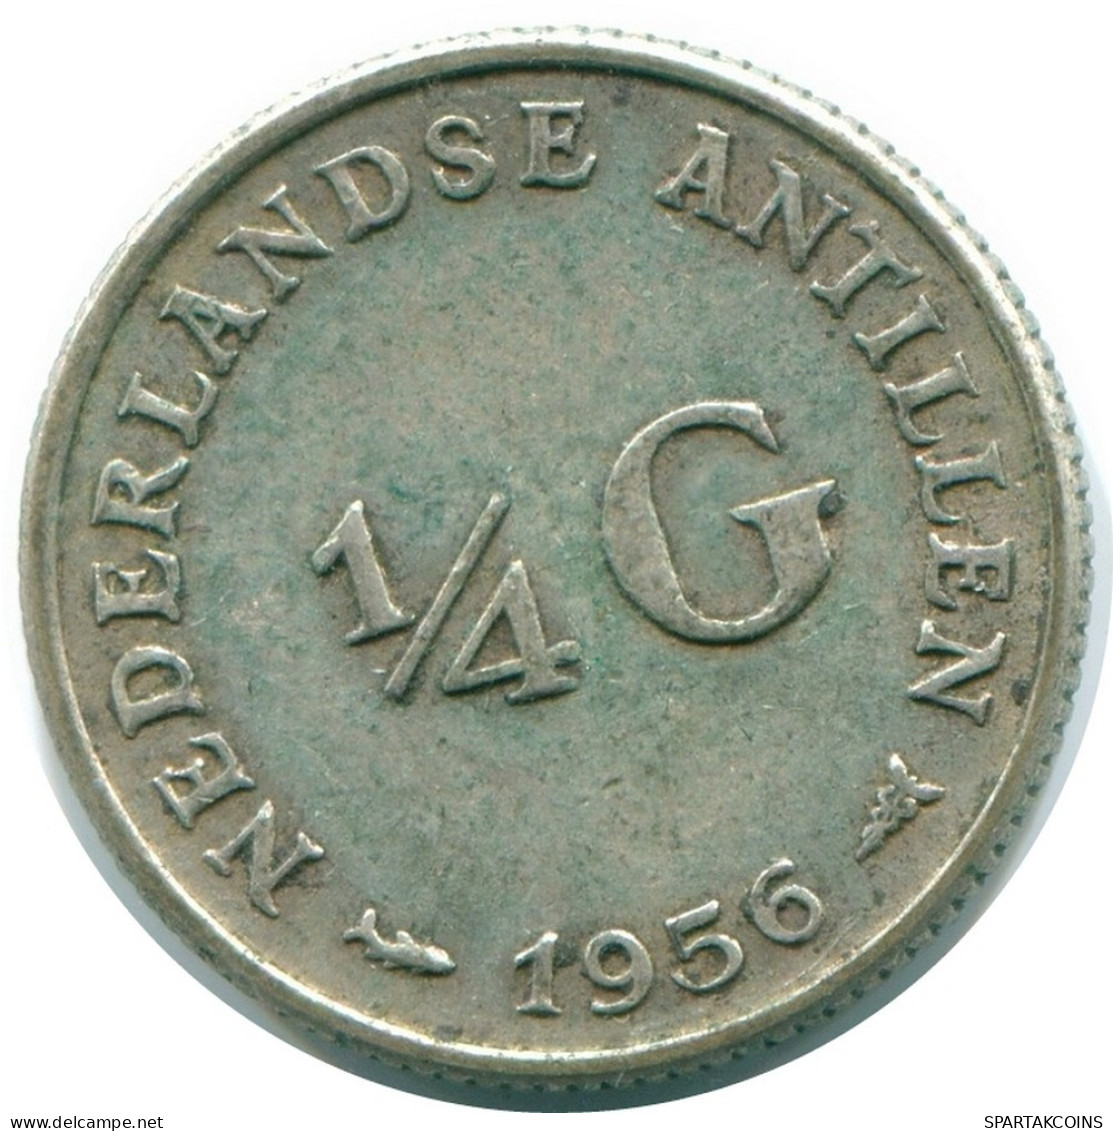 1/4 GULDEN 1956 NETHERLANDS ANTILLES SILVER Colonial Coin #NL10919.4.U.A - Netherlands Antilles